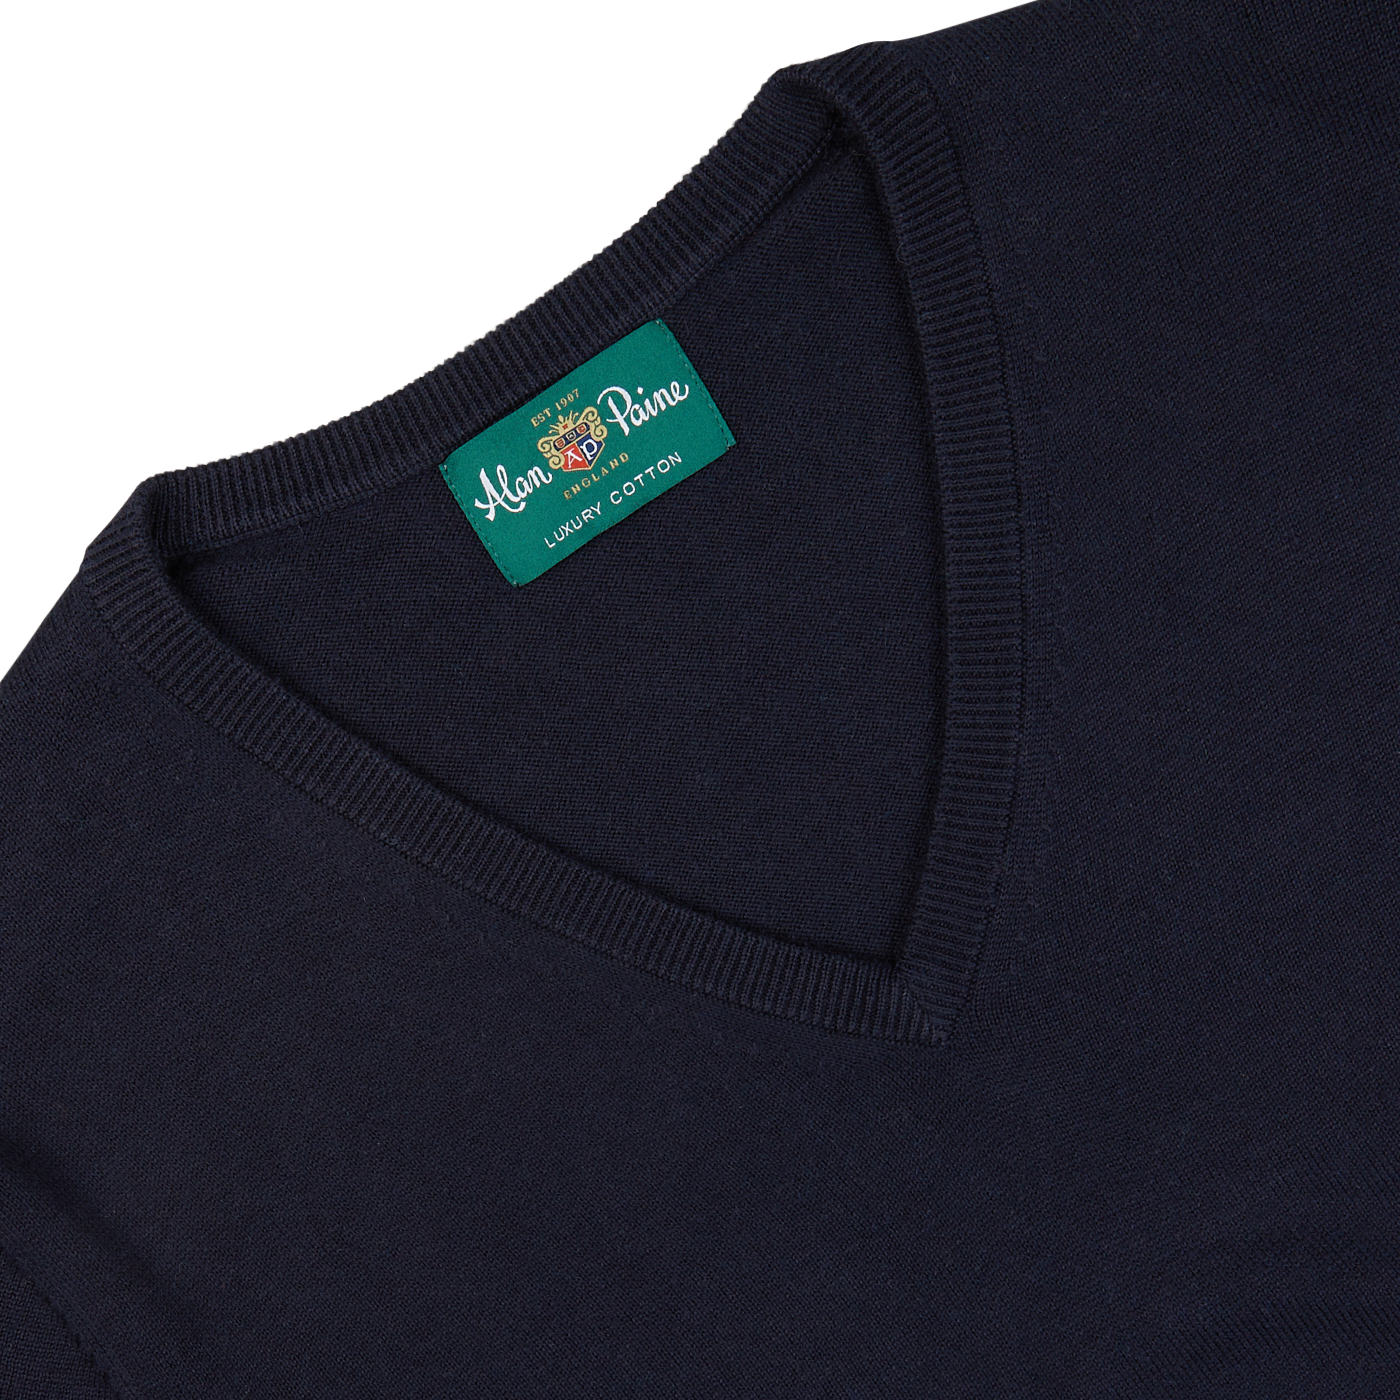 Close-up of a dark blue, Alan Paine luxury cotton cashmere summer v-neck sweater neckline featuring an Alan Paine brand label.